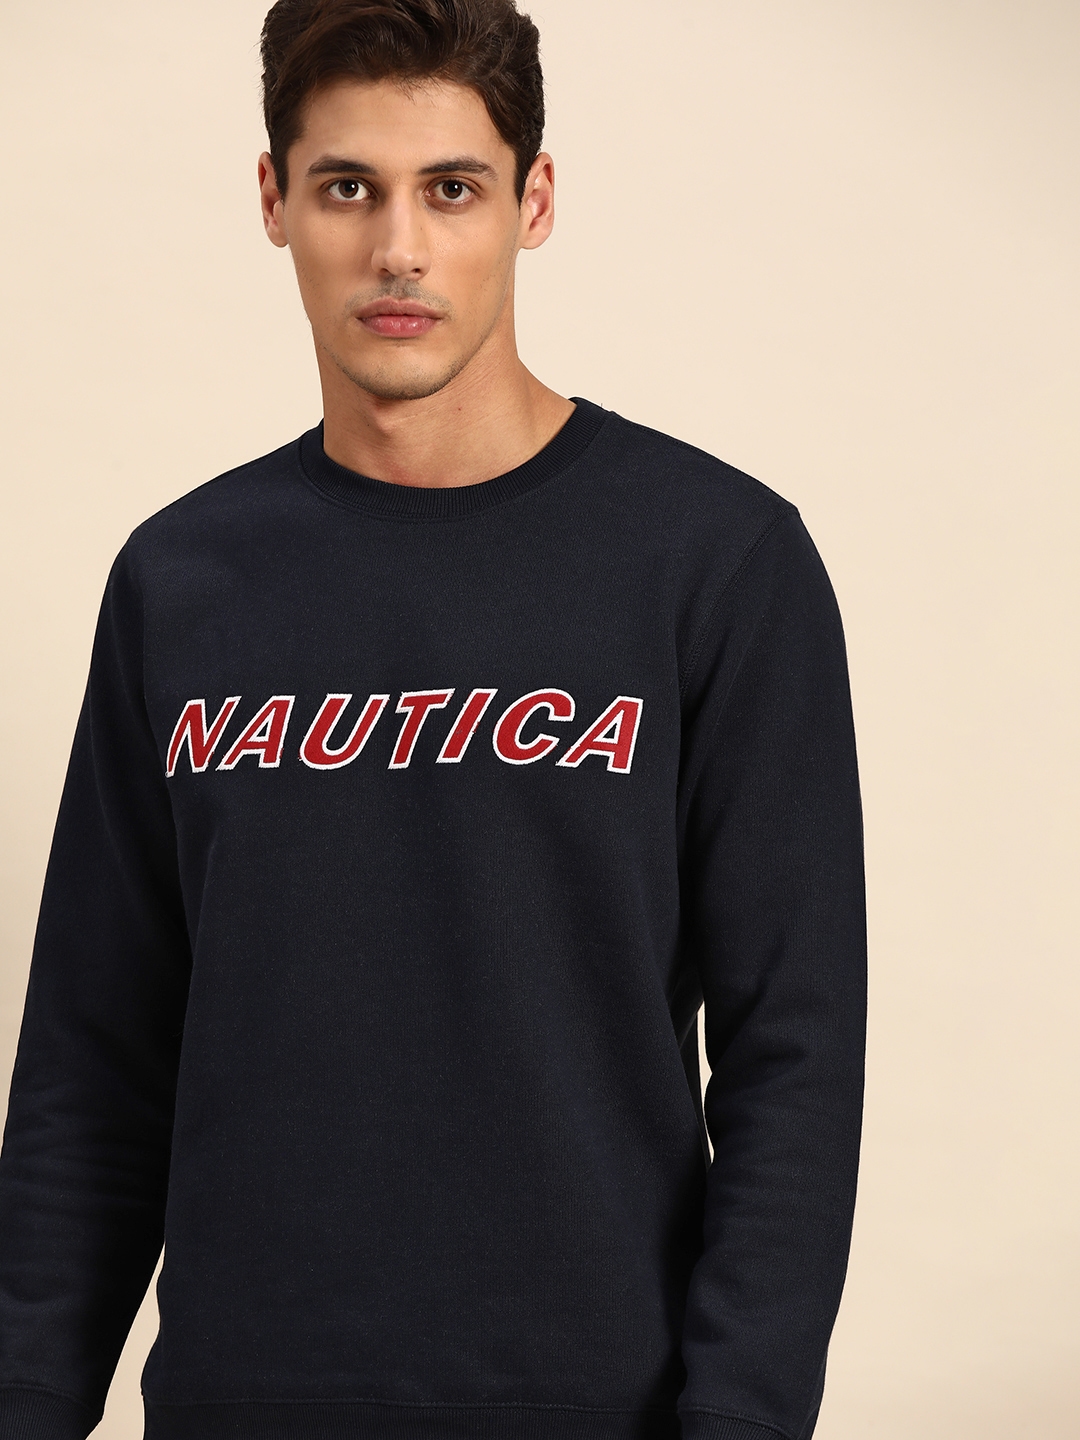 Nautica Men Navy Blue Embroidered Sweatshirt